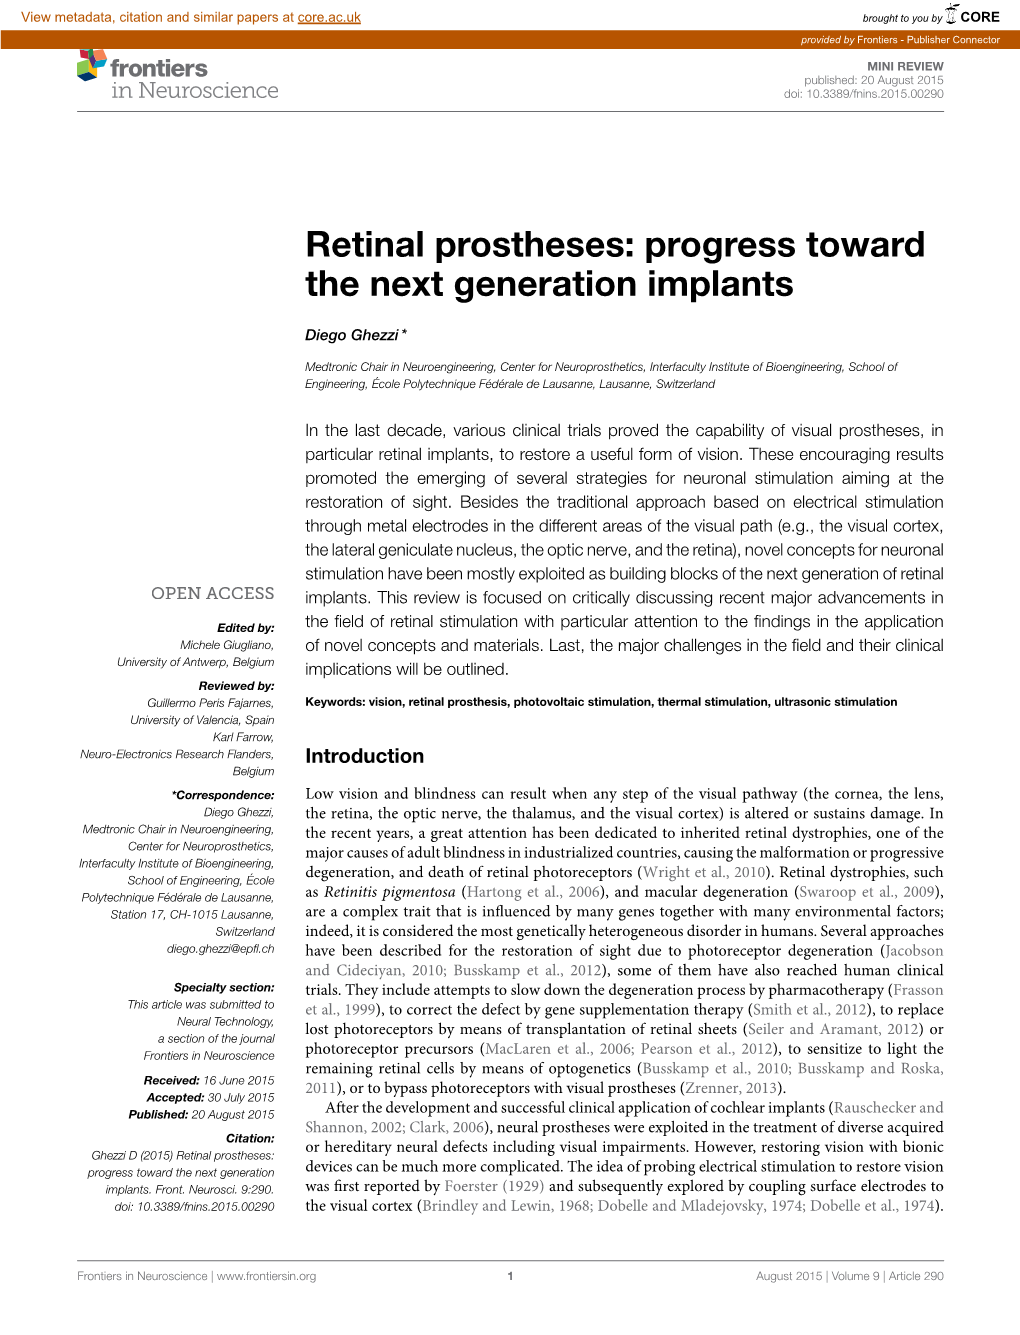 Retinal Prostheses: Progress Toward the Next Generation Implants